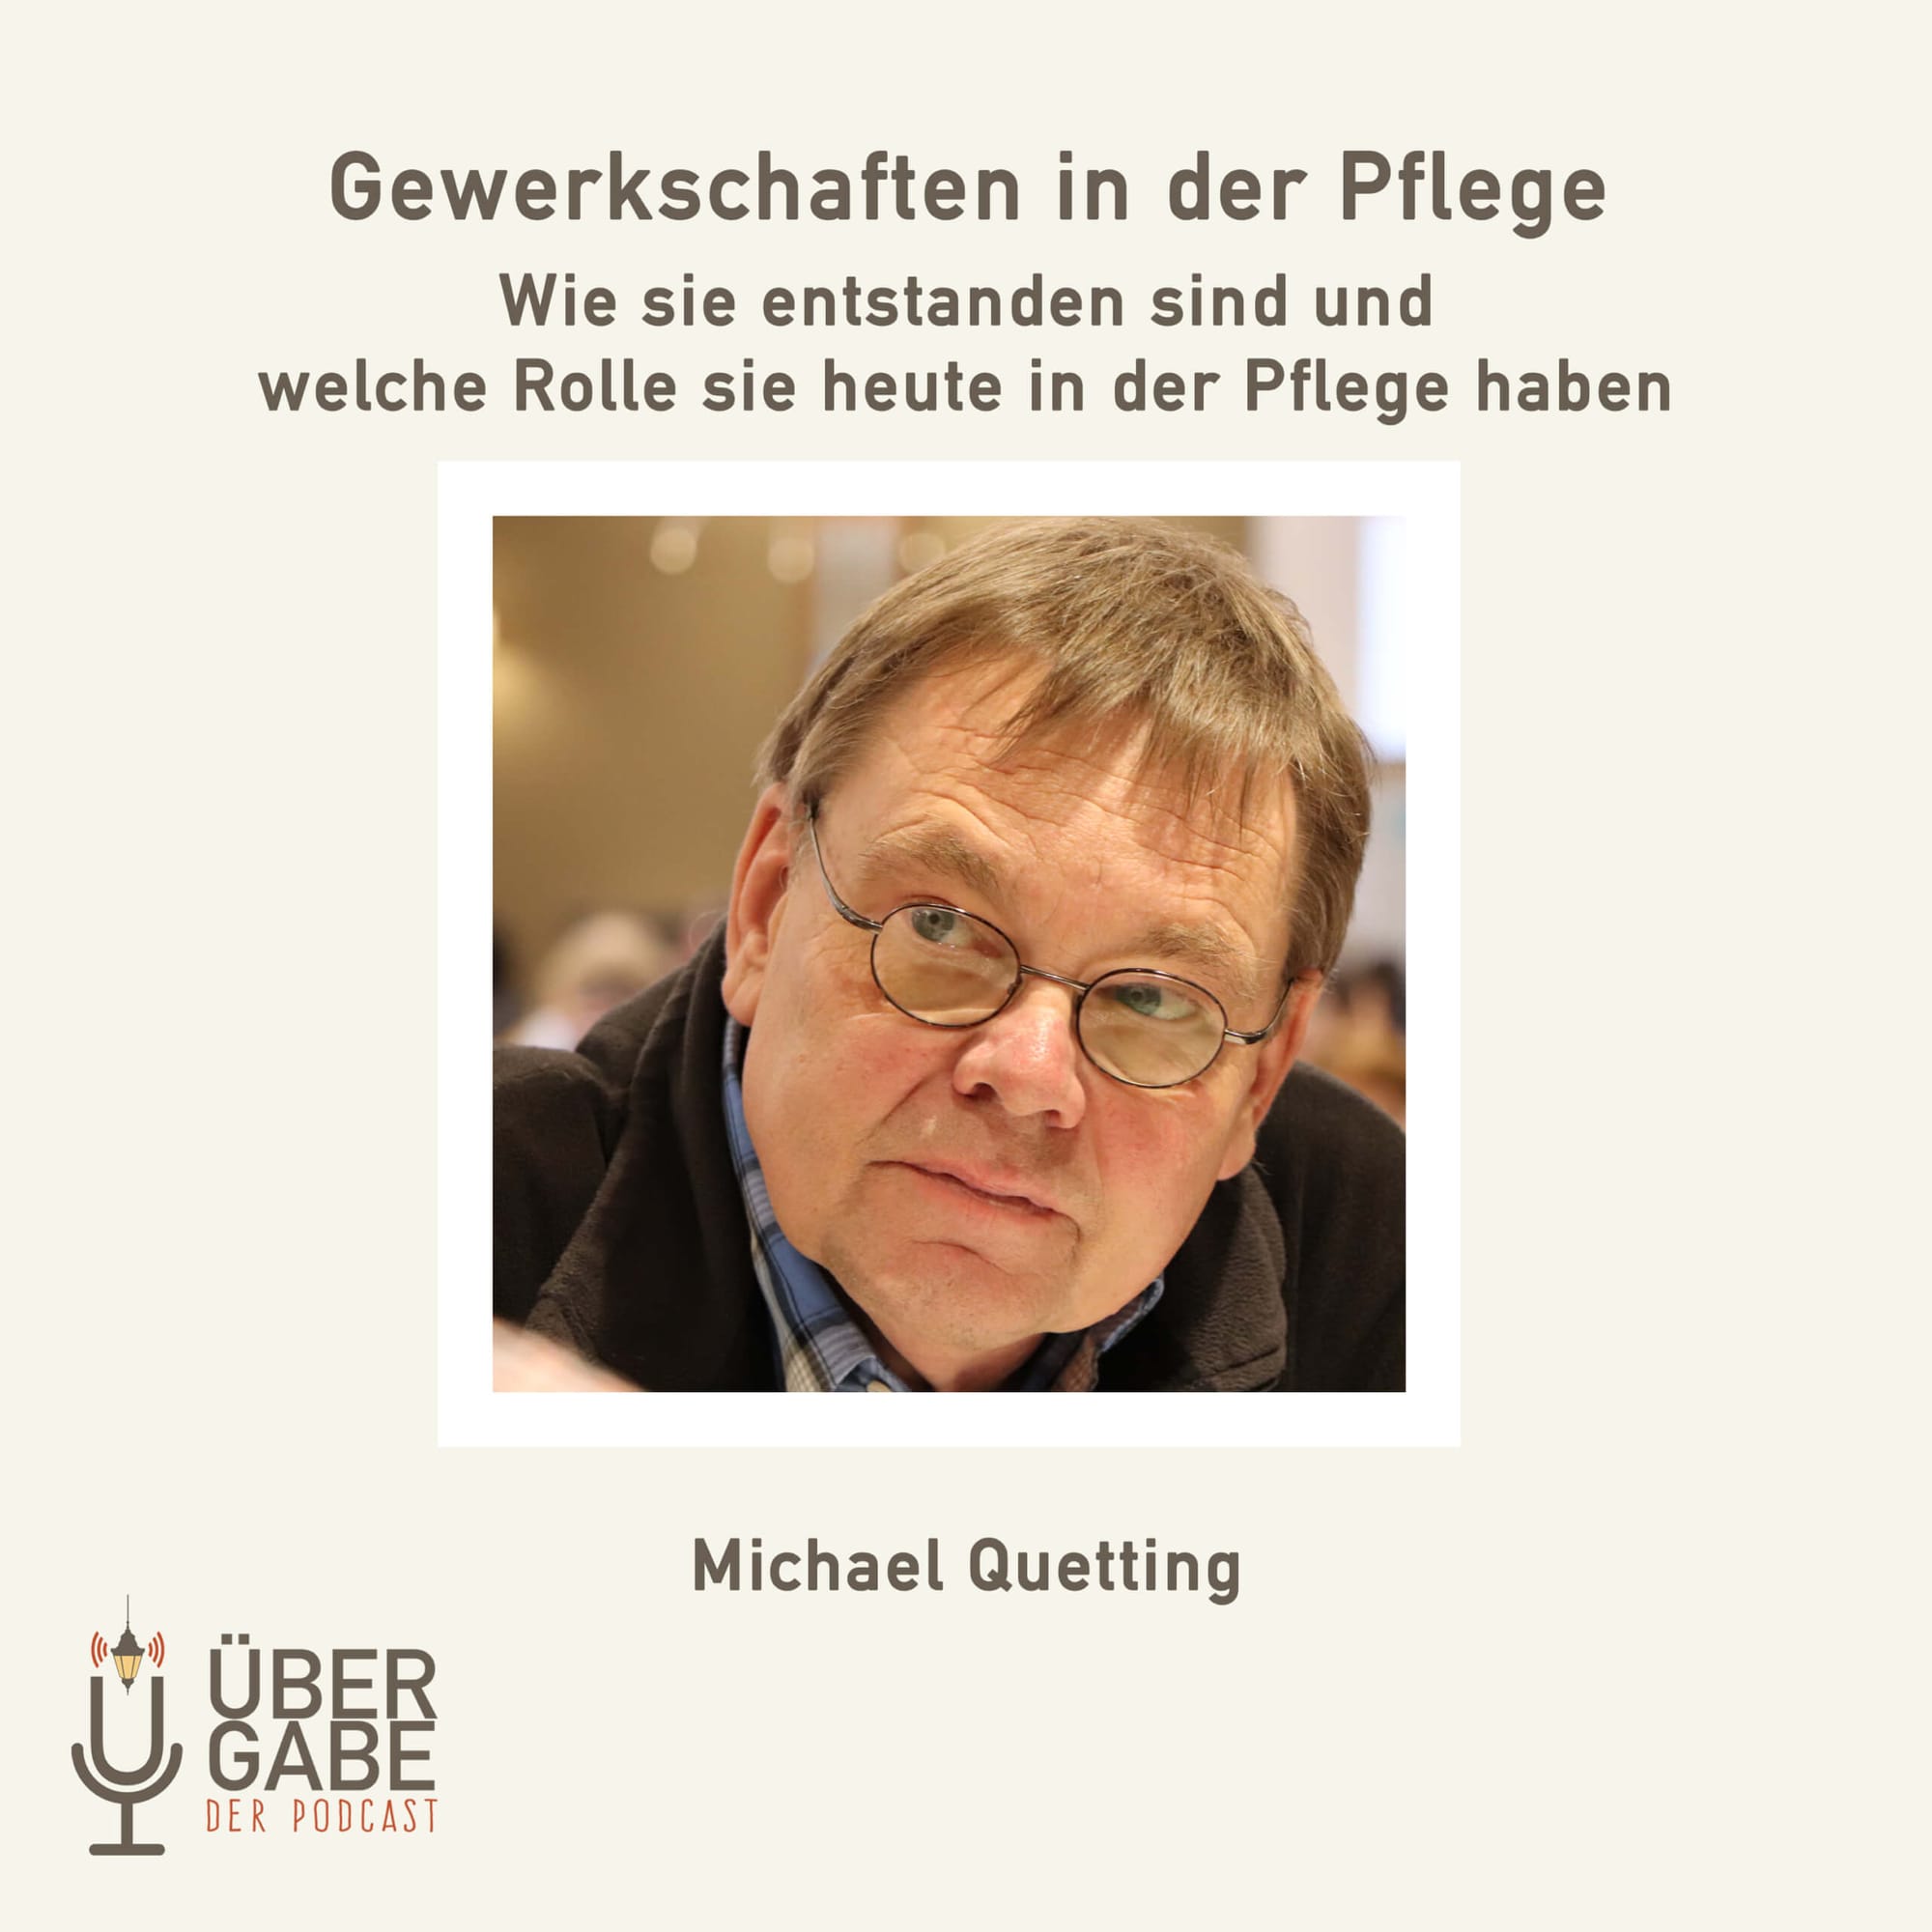 ÜG064 - Gewerkschaften in der Pflege (Michael Quetting)